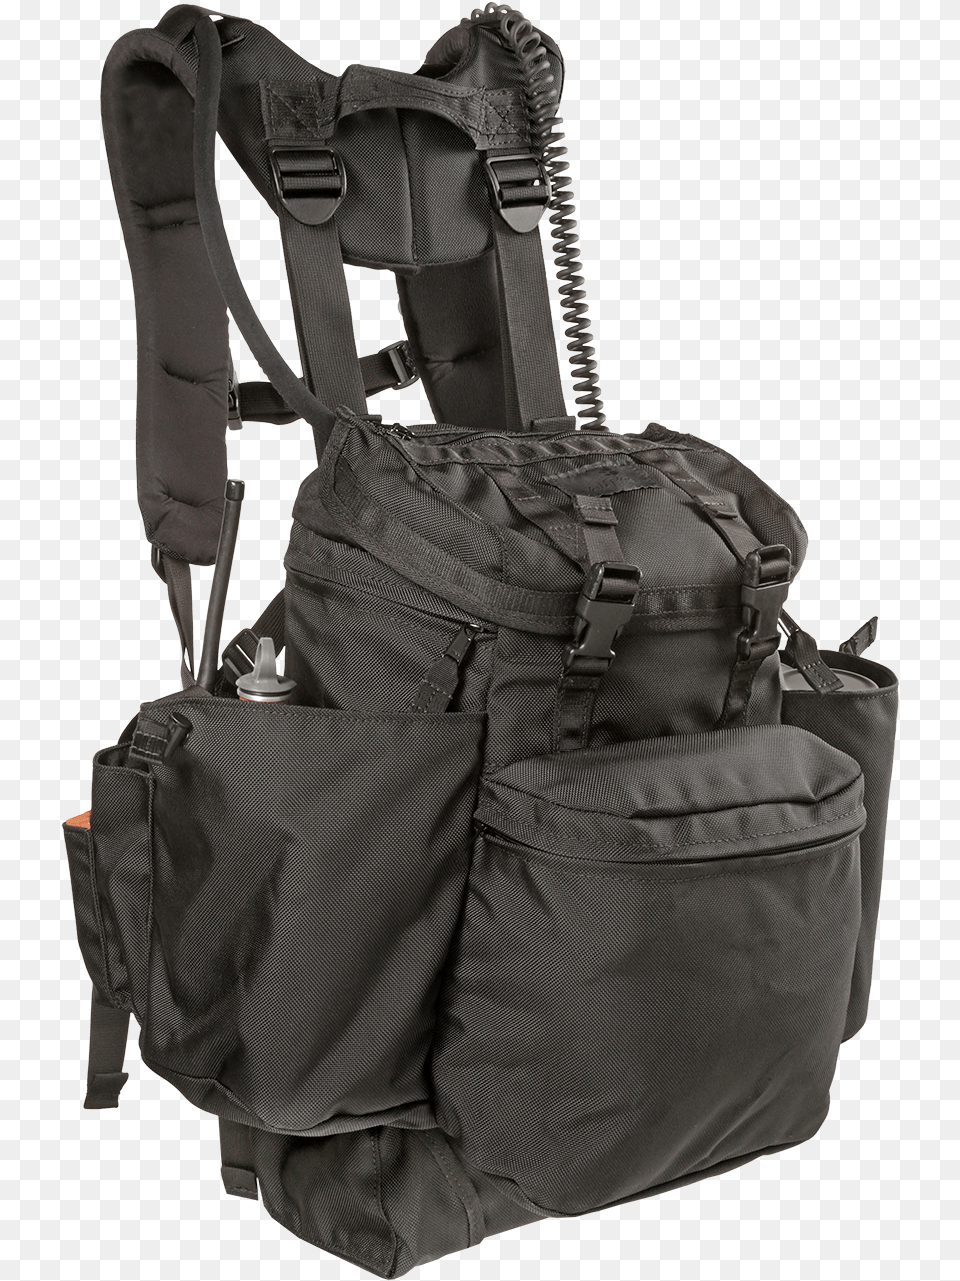 Alpha 17 Fire Line Pack System Wildland Fire Packs, Accessories, Bag, Handbag, Backpack Free Png